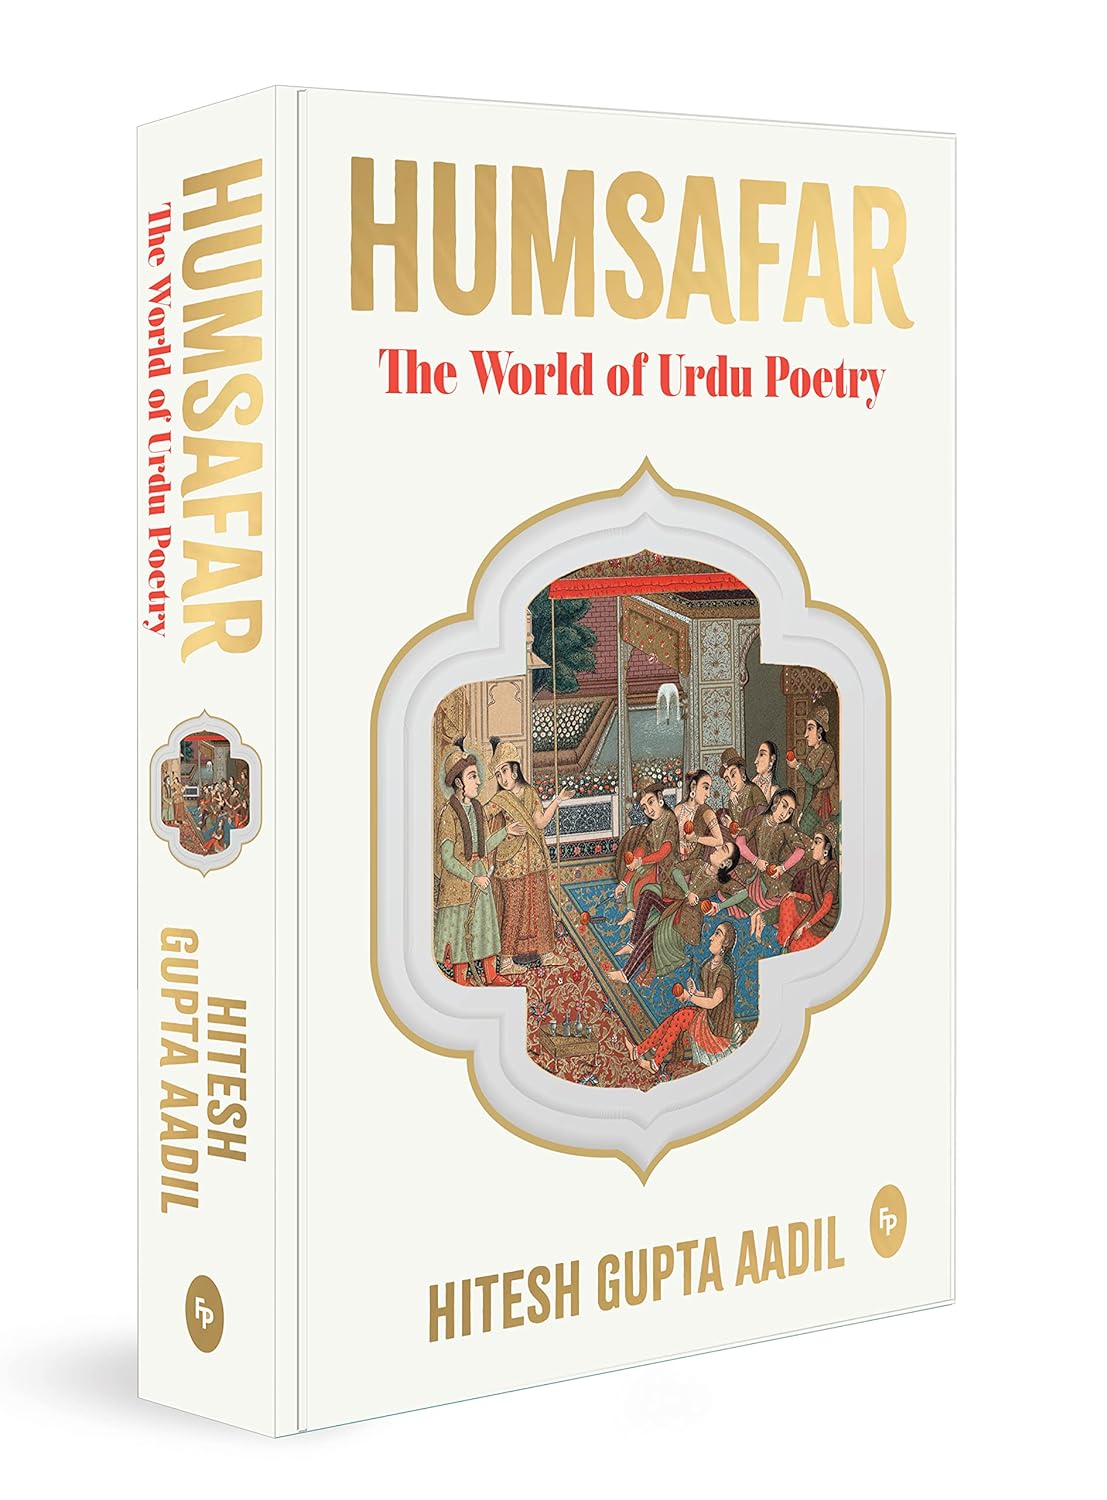 HUMSAFAR : The World of Urdu Poetry by Hitesh Gupta Aadil by Hitesh Gupta Aadil